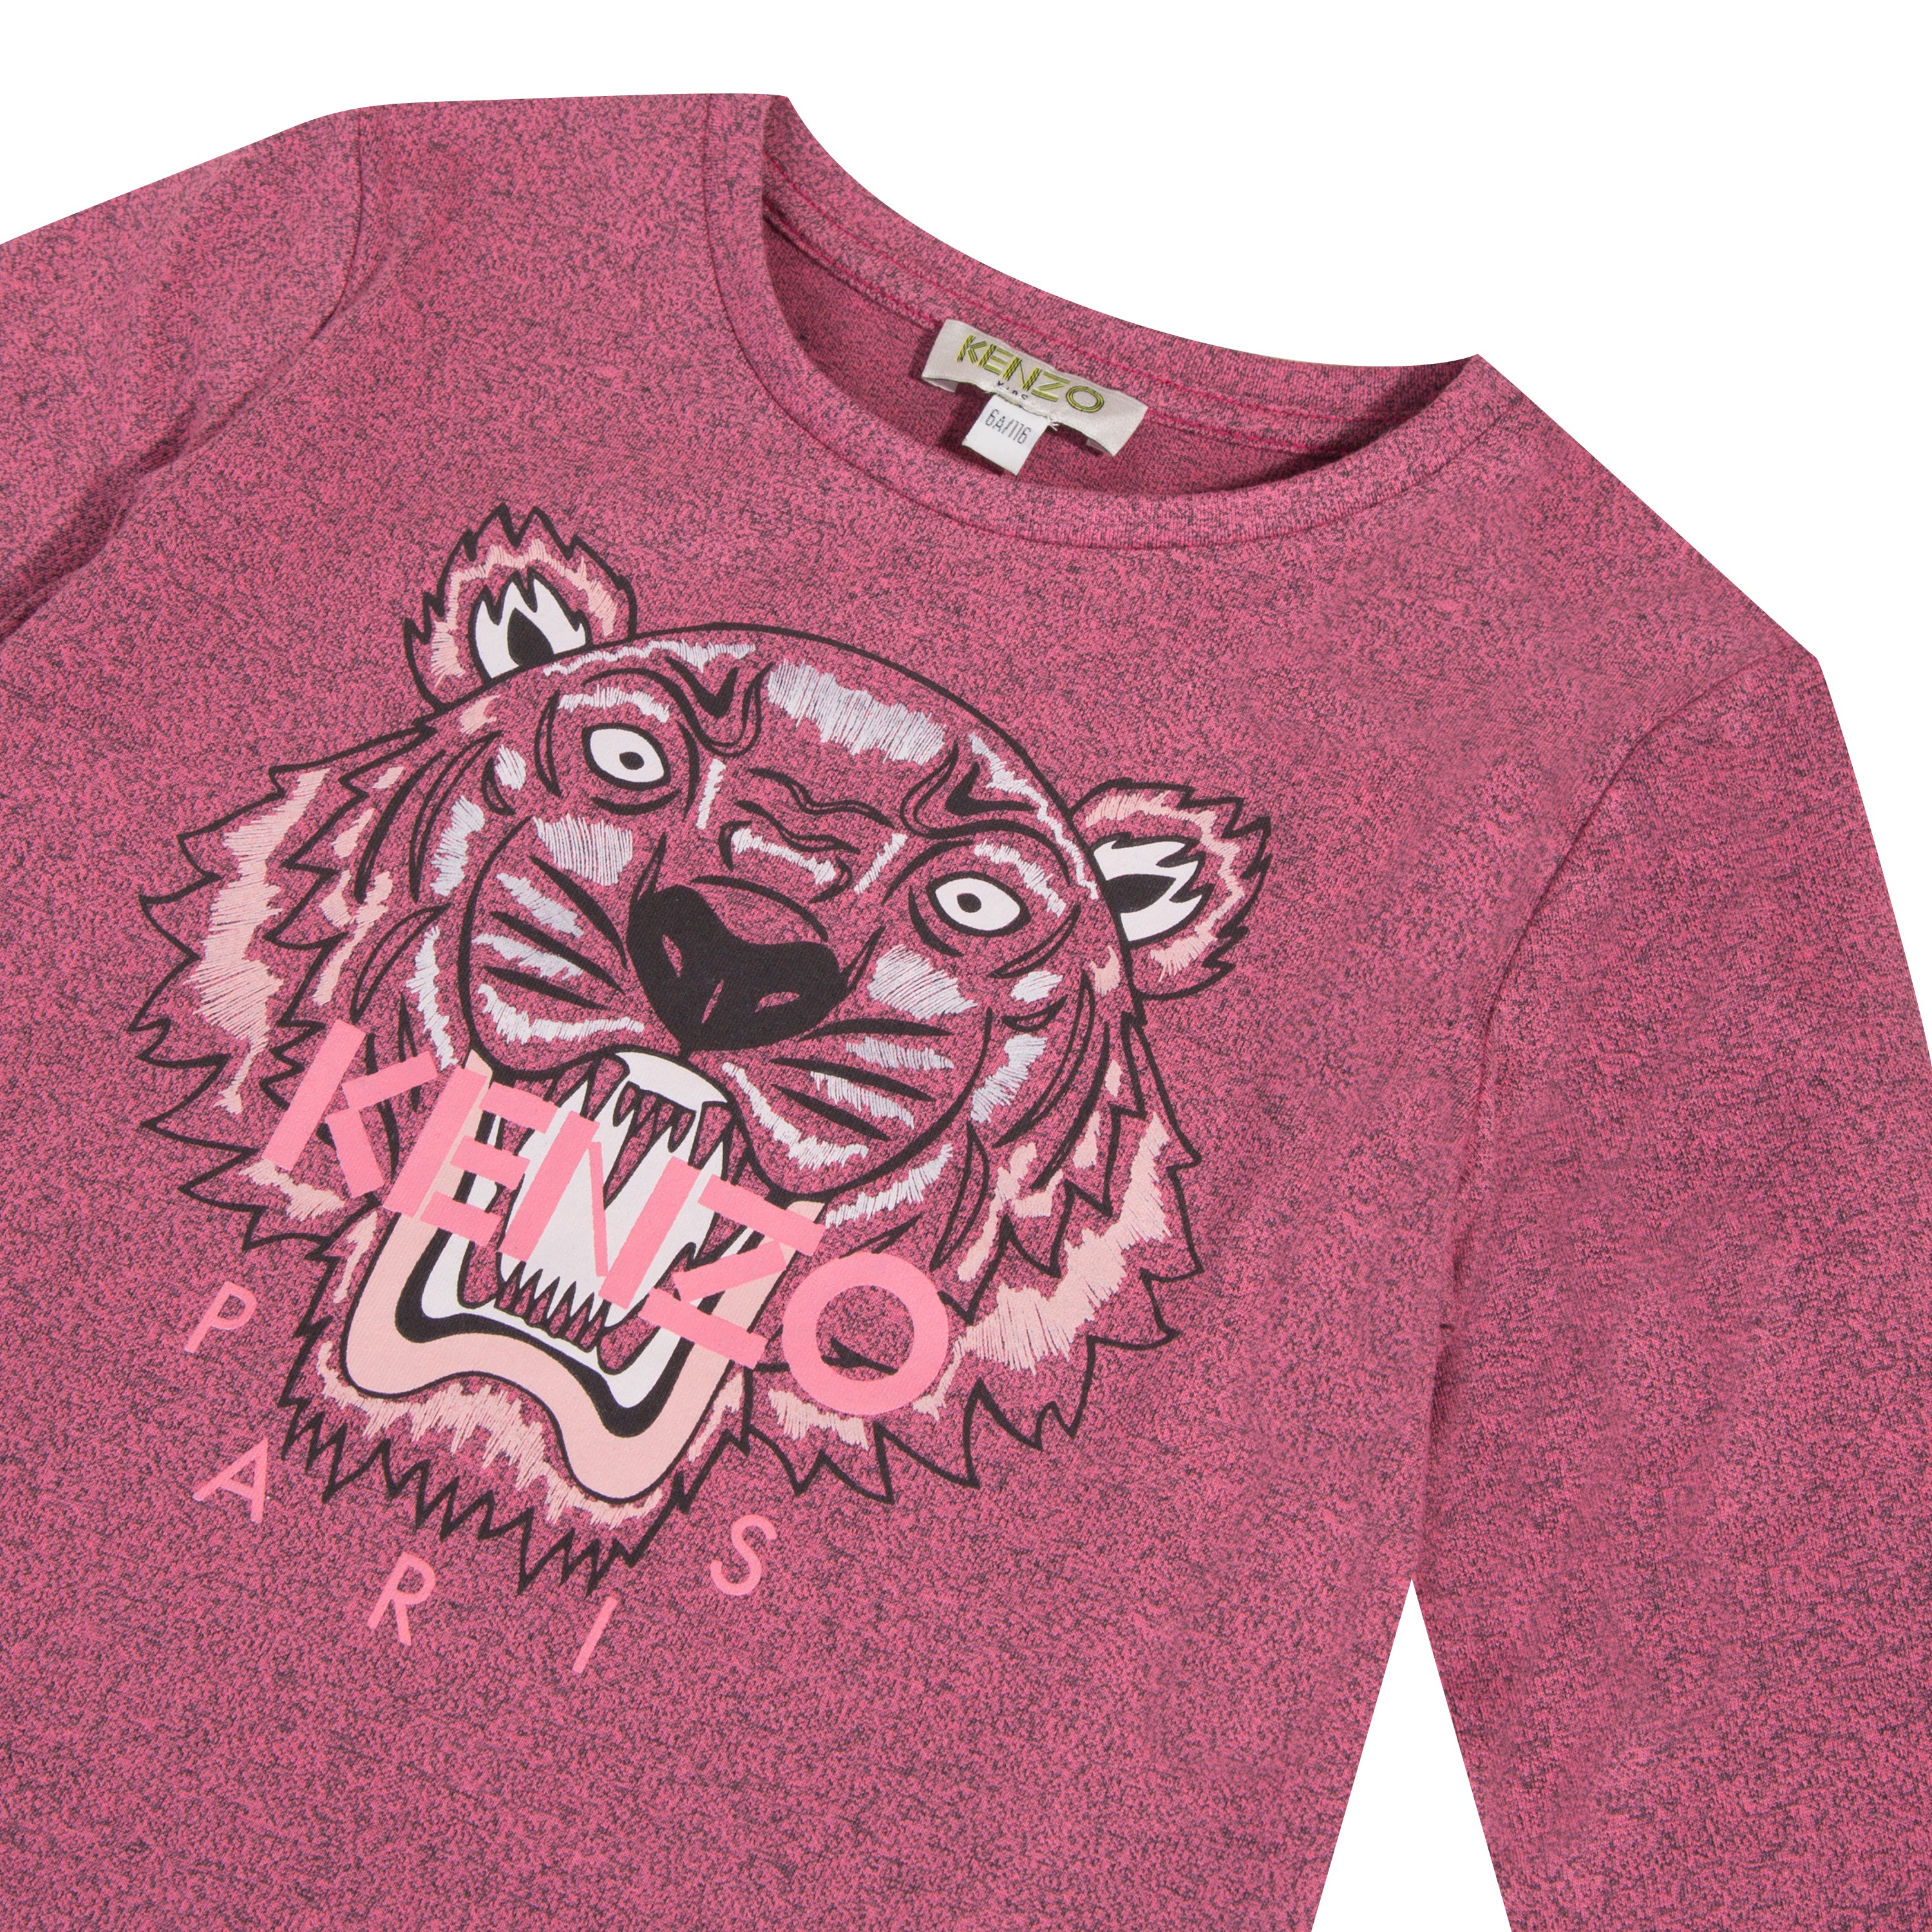 Girls Bright Pink Tiger Cotton Top